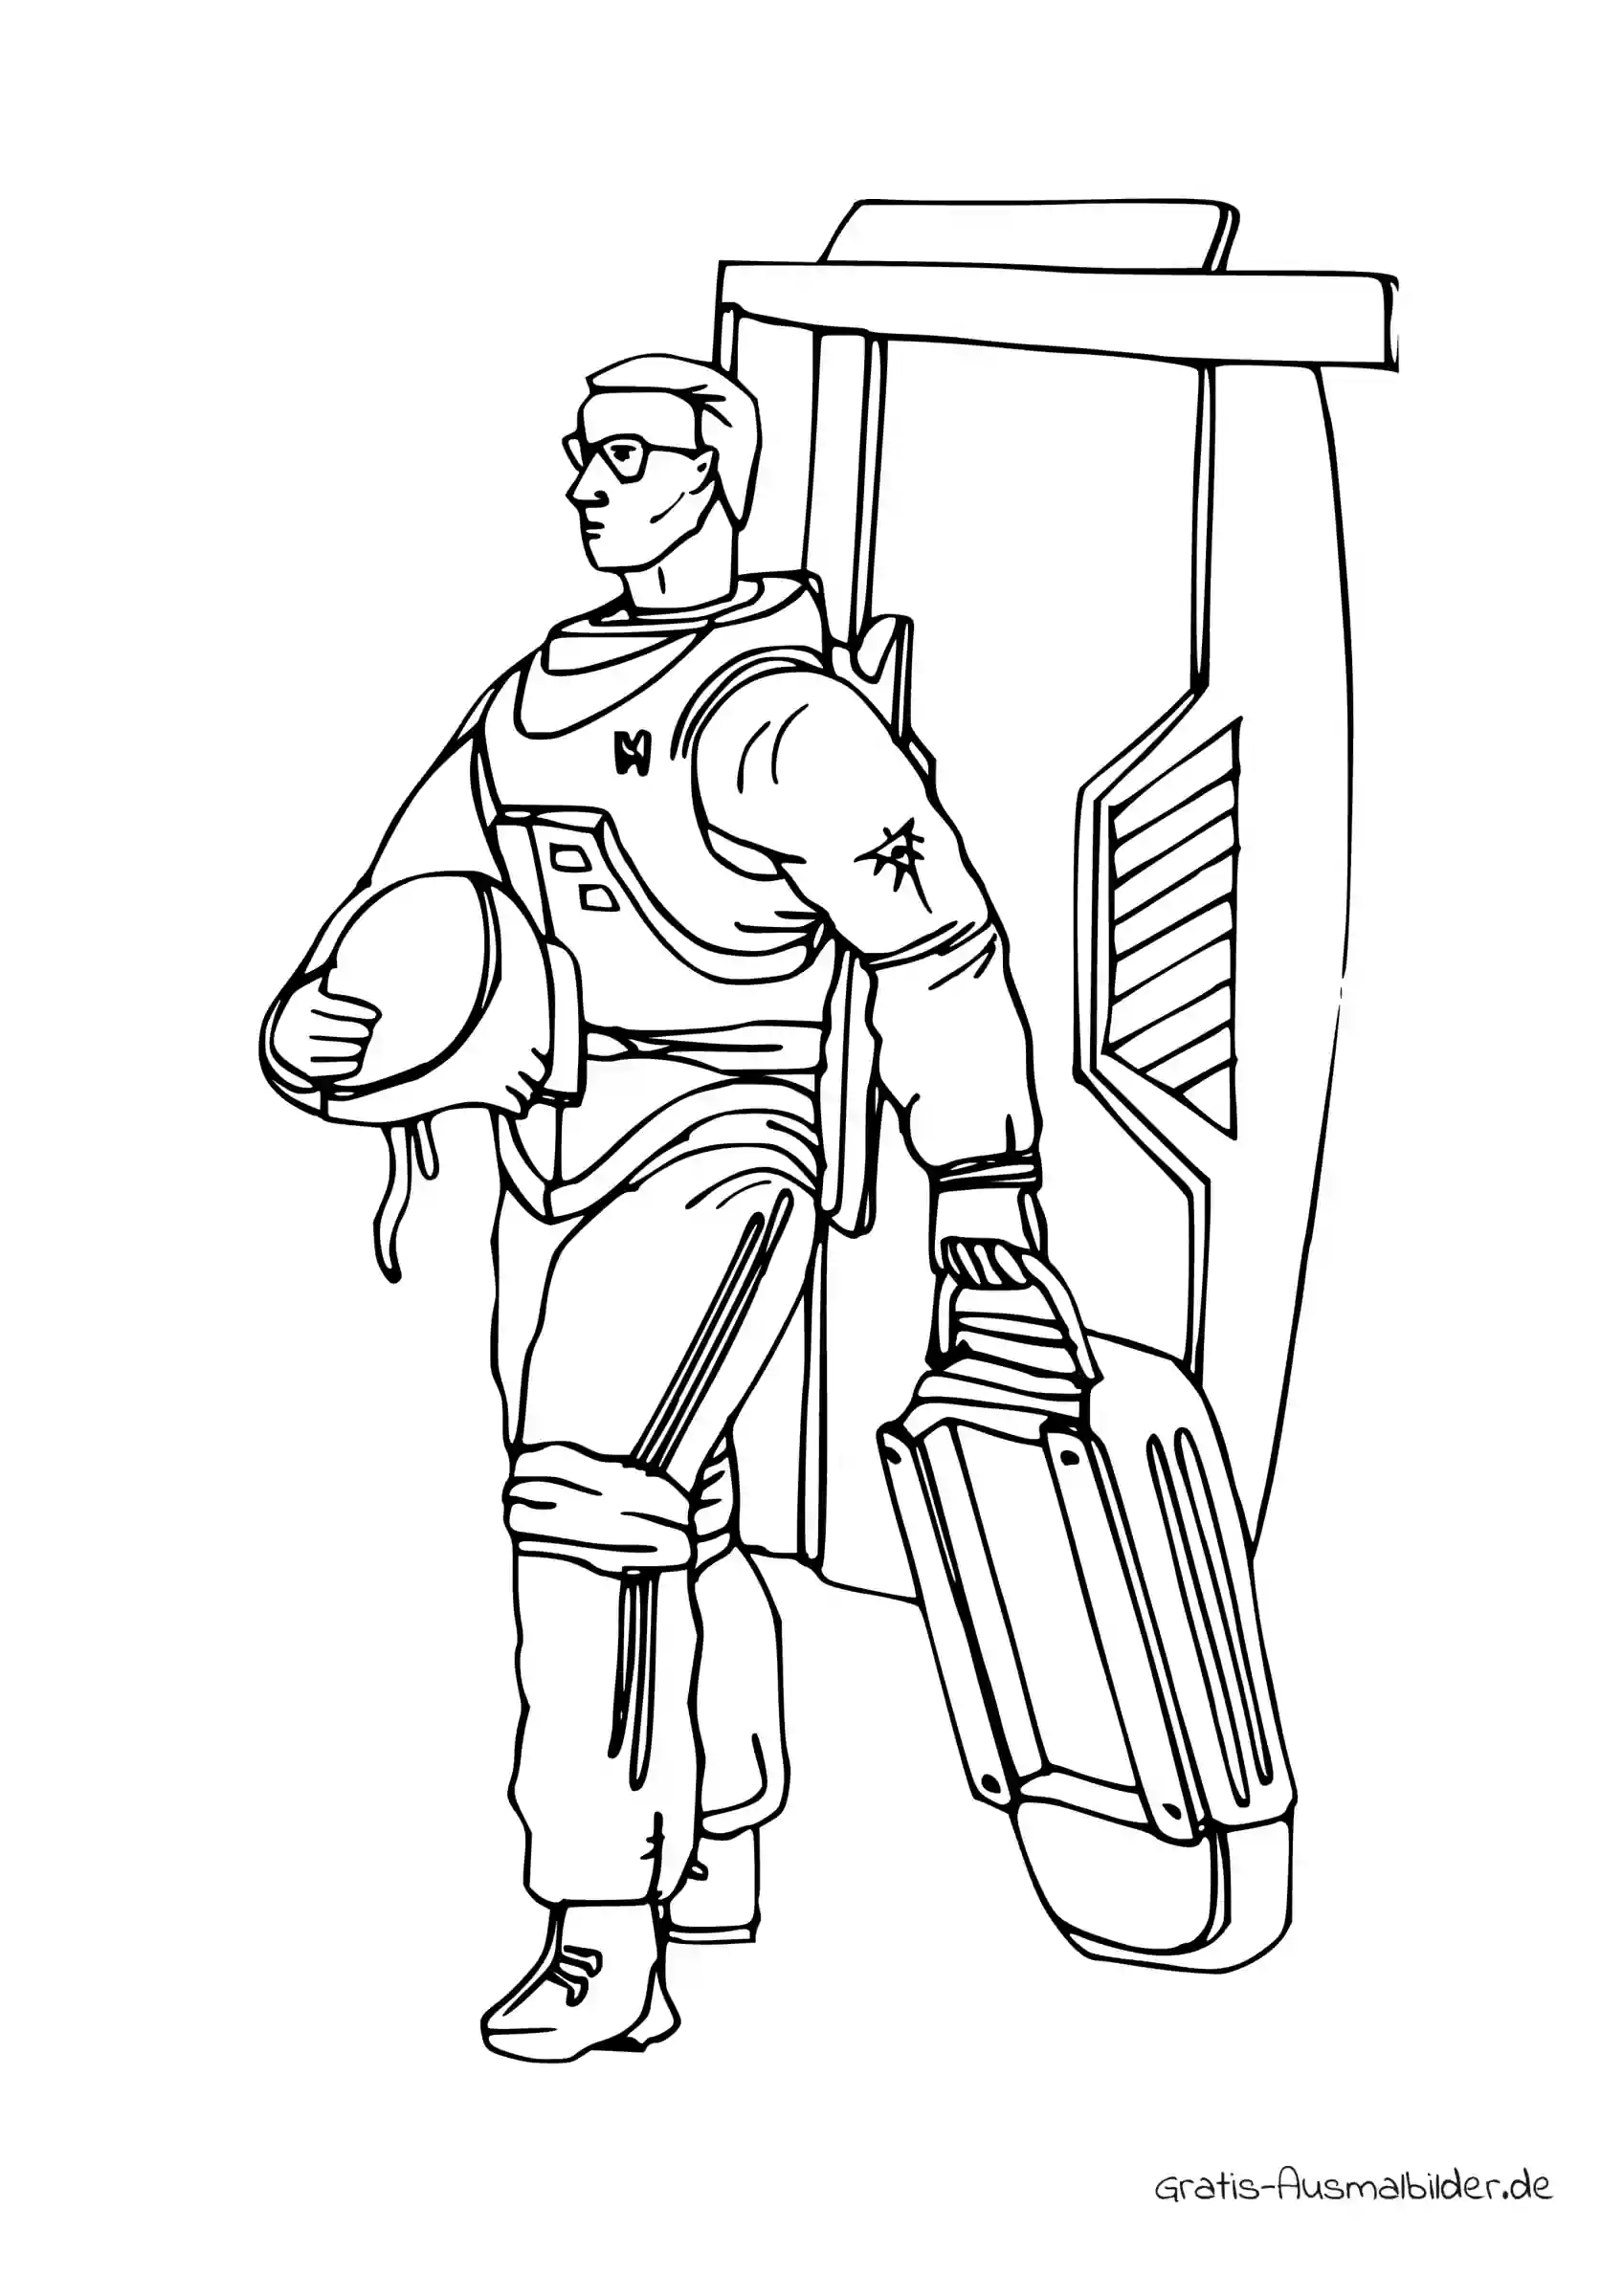 Ausmalbild Astronaut mit Koffer